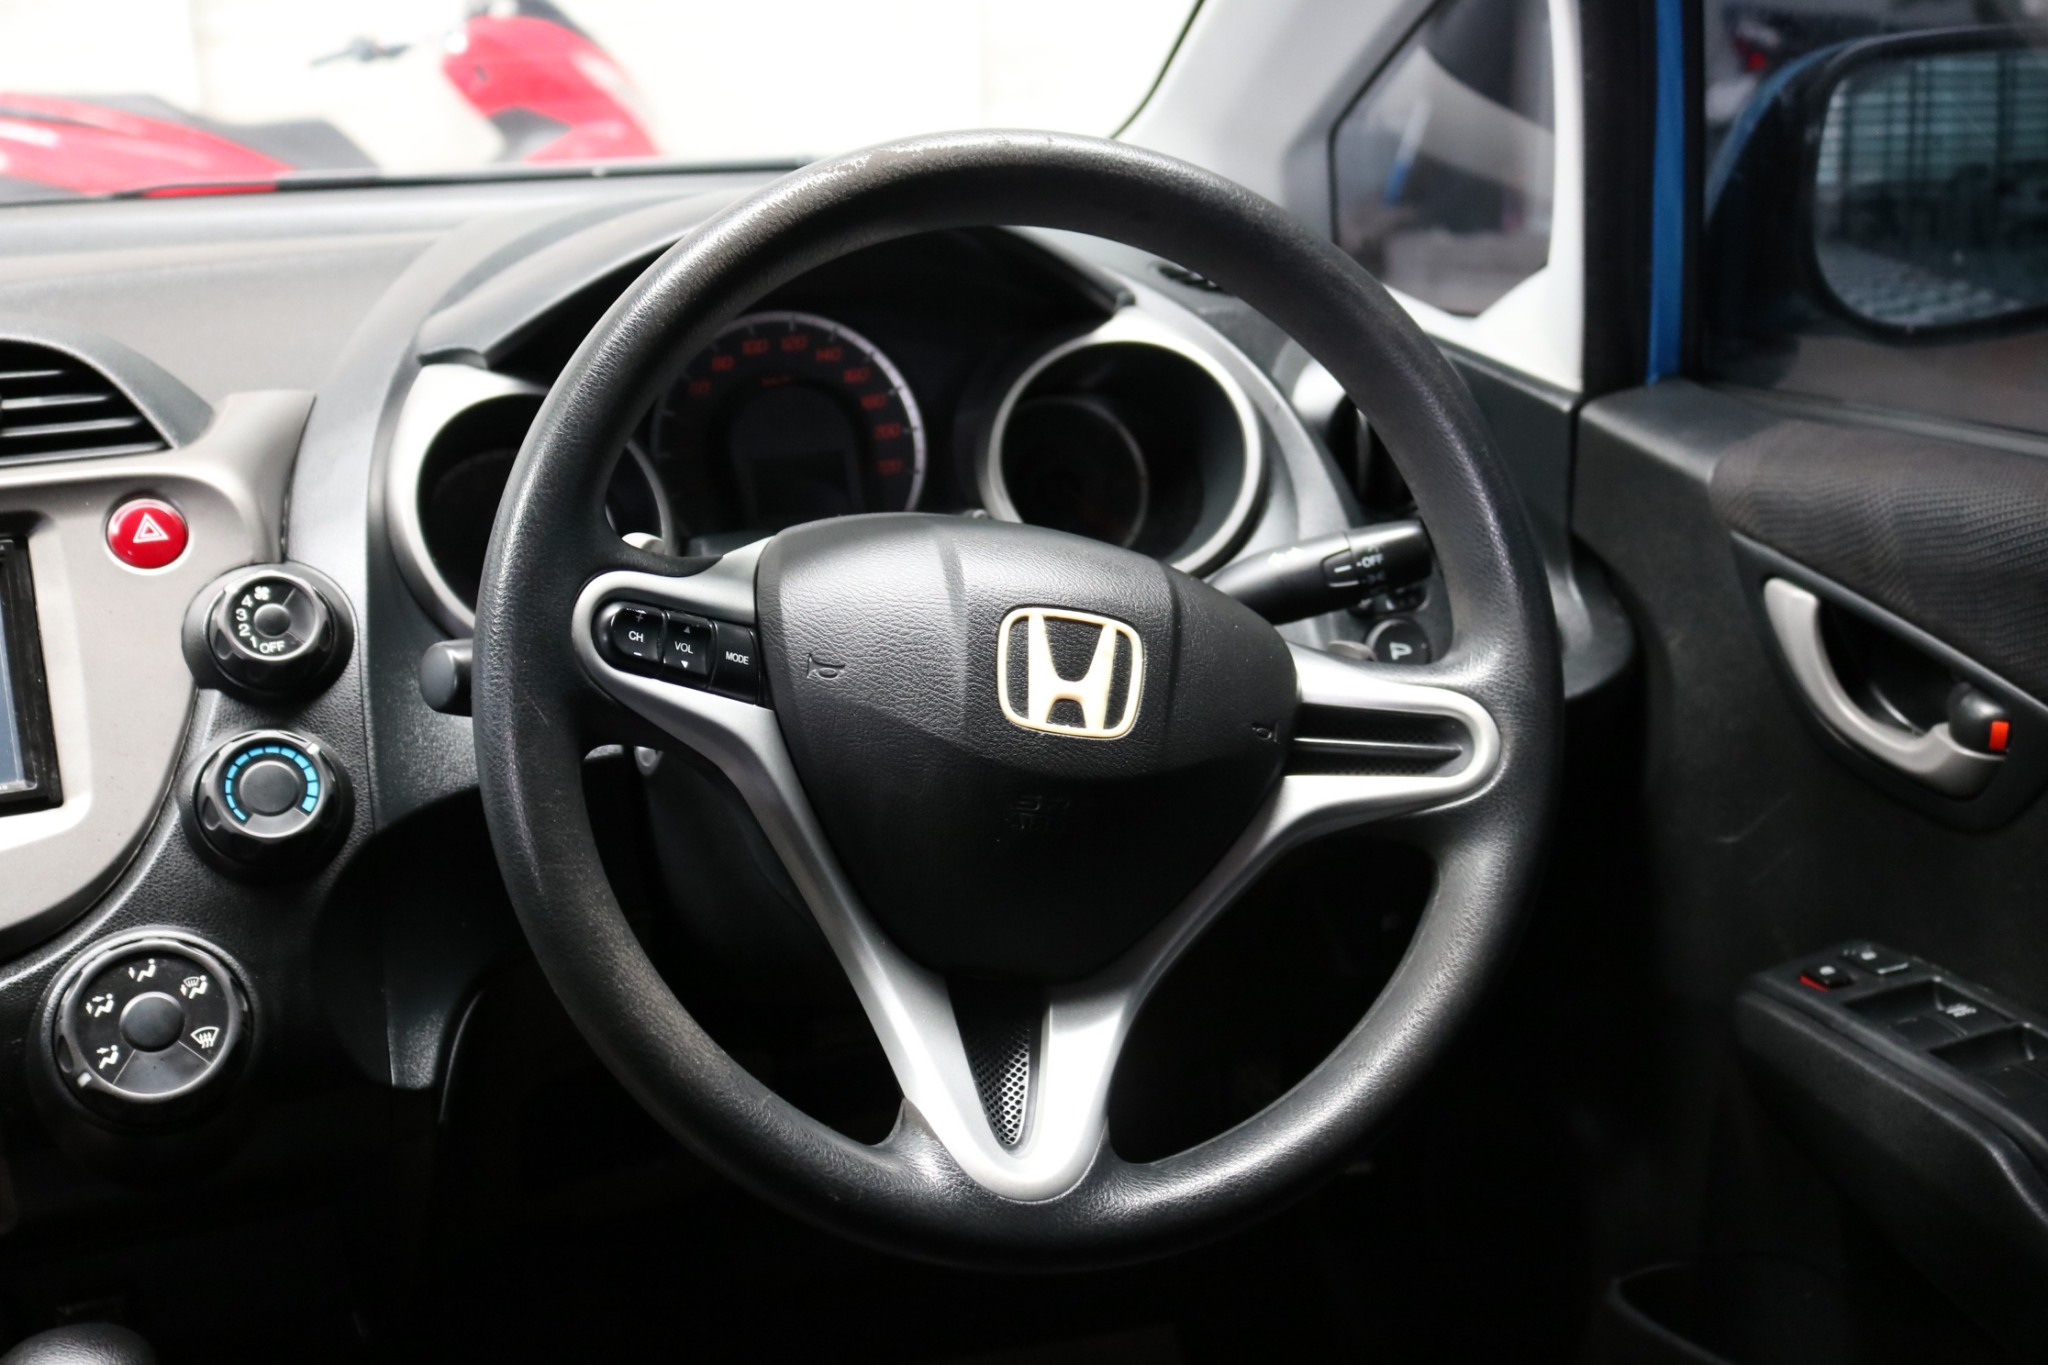 Honda Jazz GE ปี 2010 สีน้ำเงิน